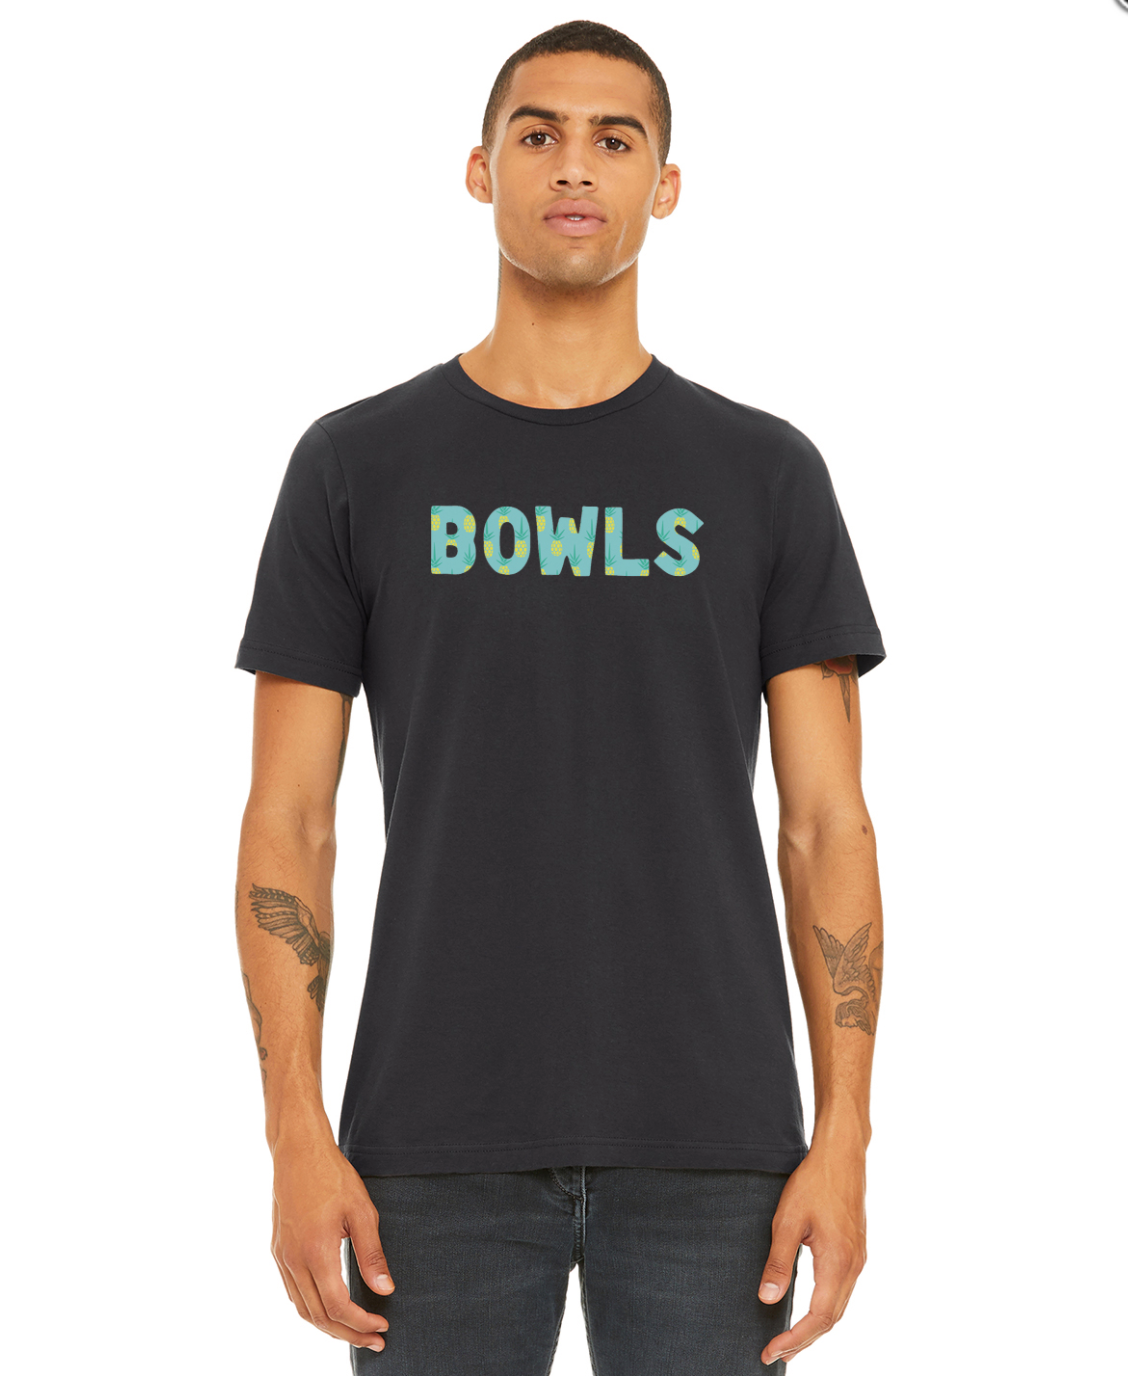 PINEAPPLE BOWLS shirt - blendersandbowls